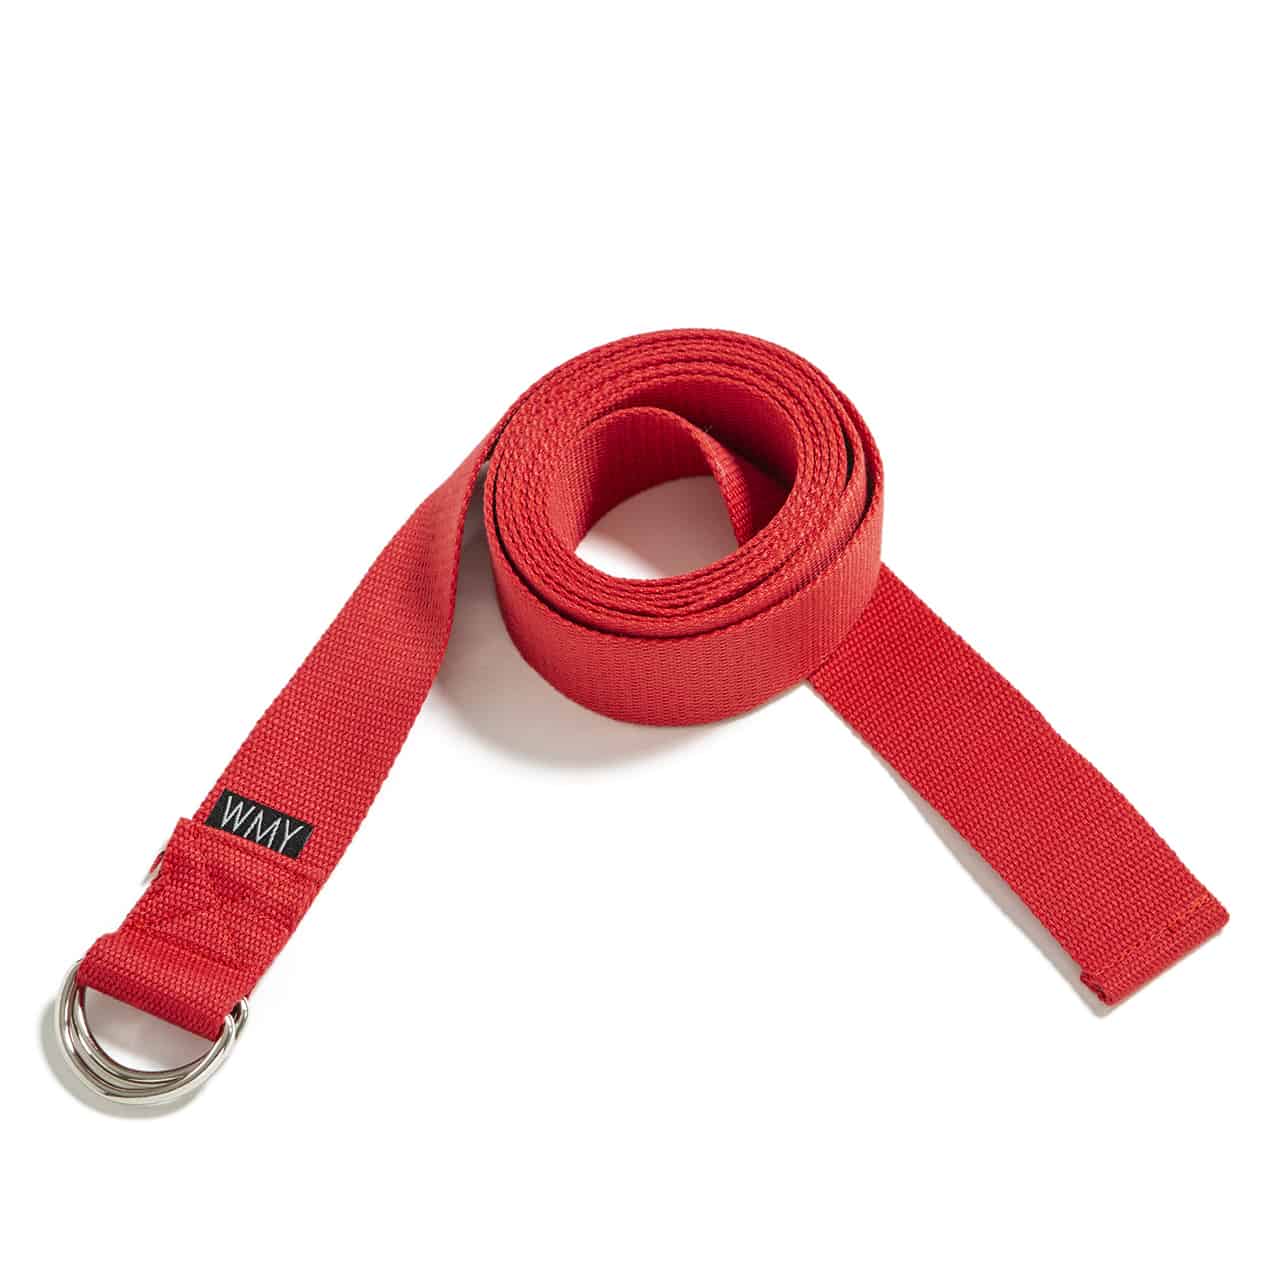 Yoga strap, yoga belt in red.